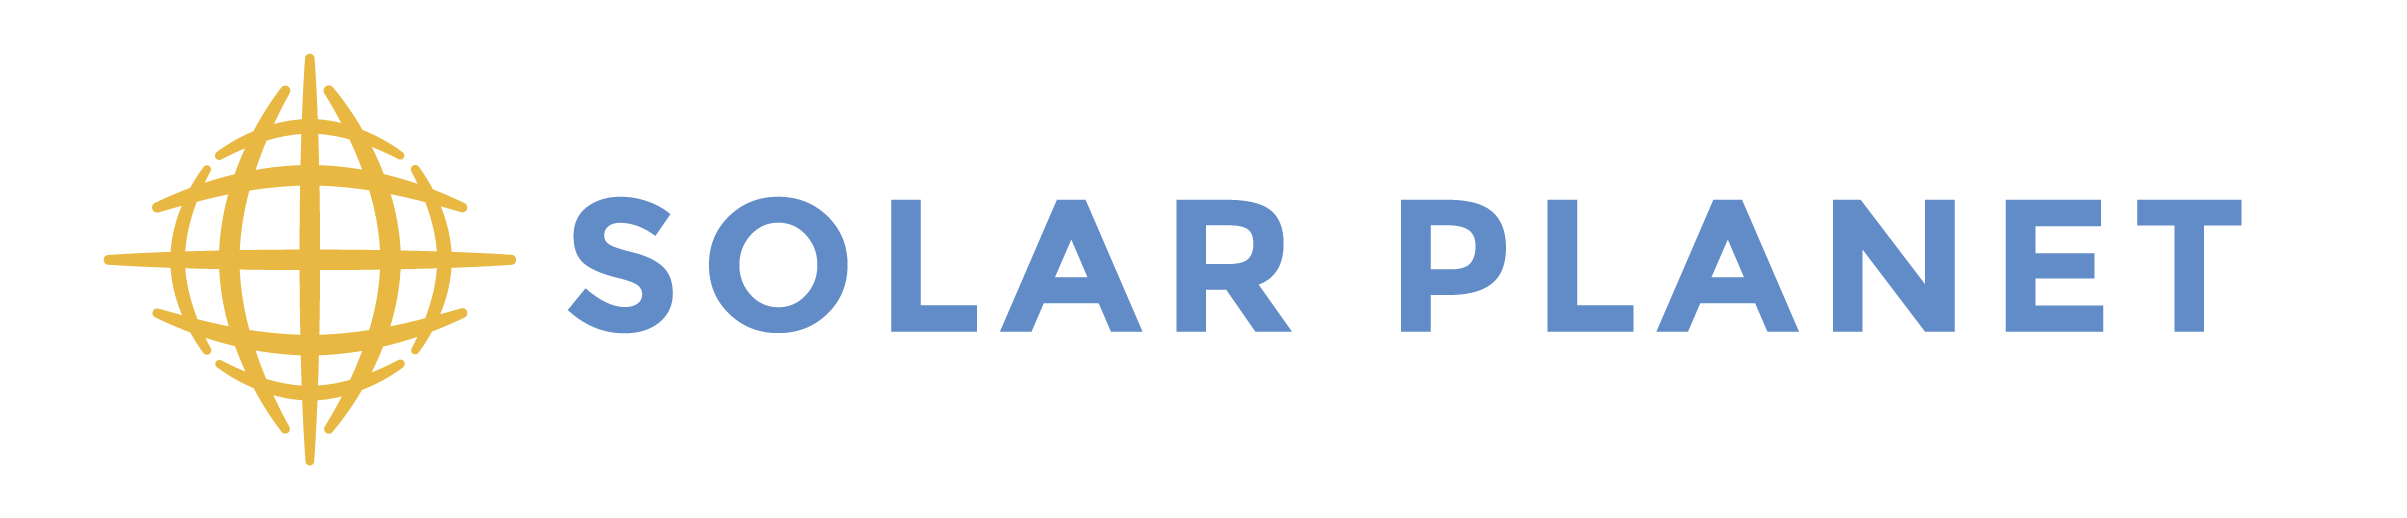 Solar Planet logo